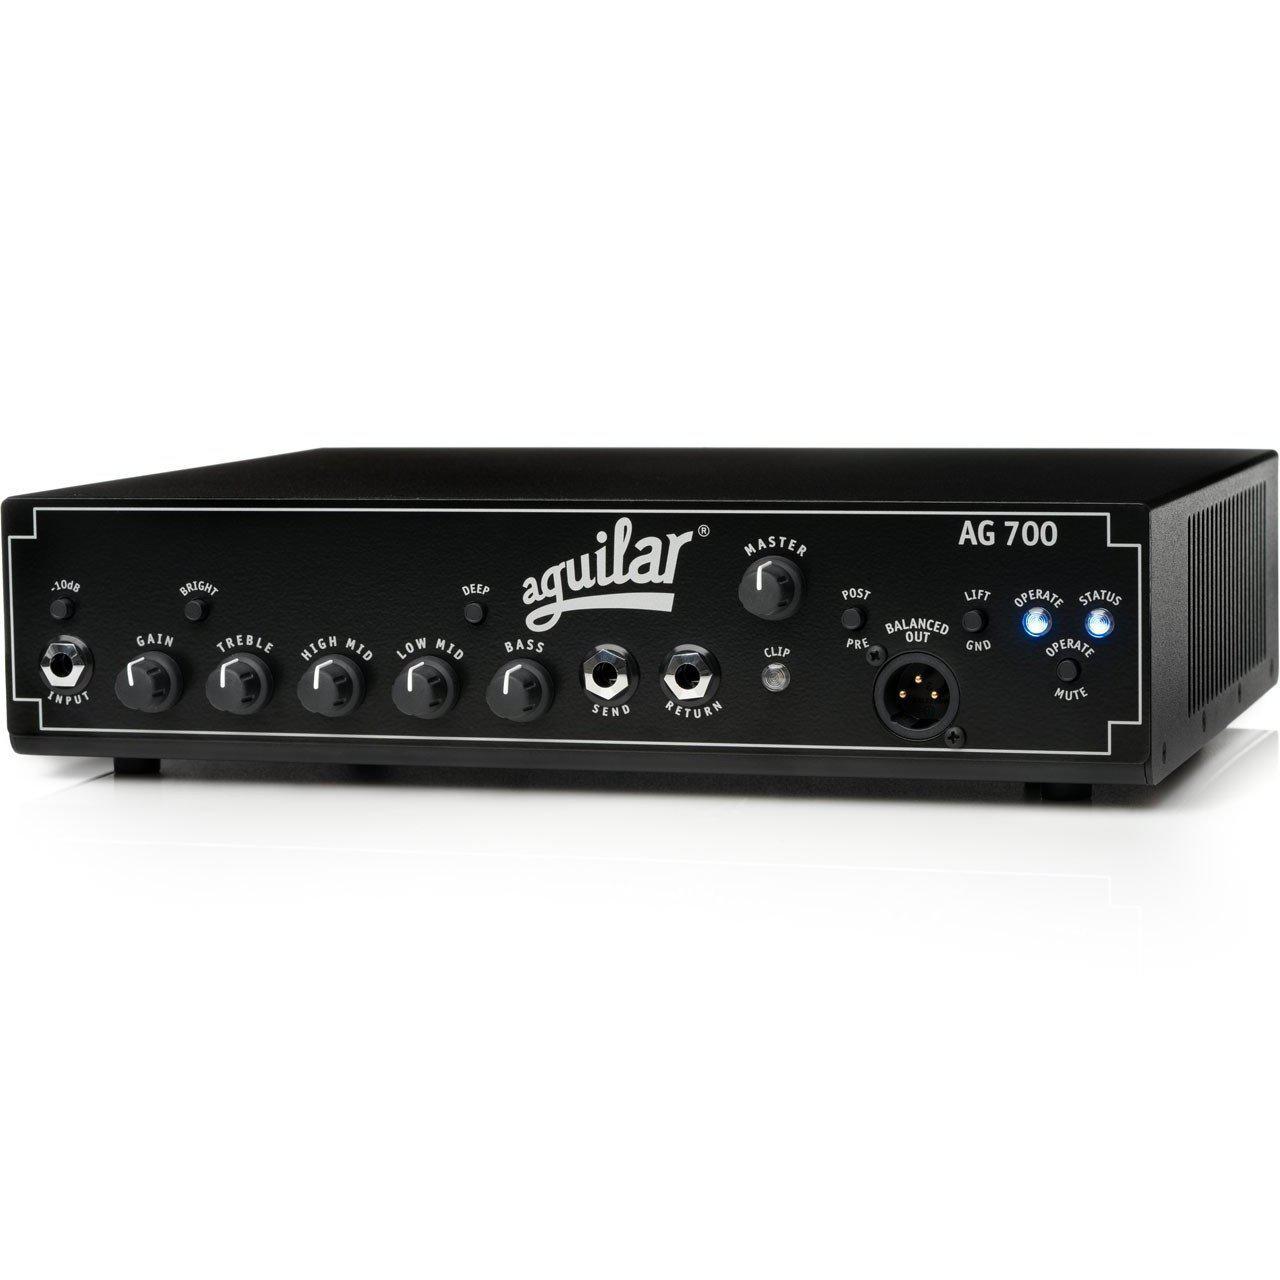 Amplifiers - Aguilar AG700 Bass Amp